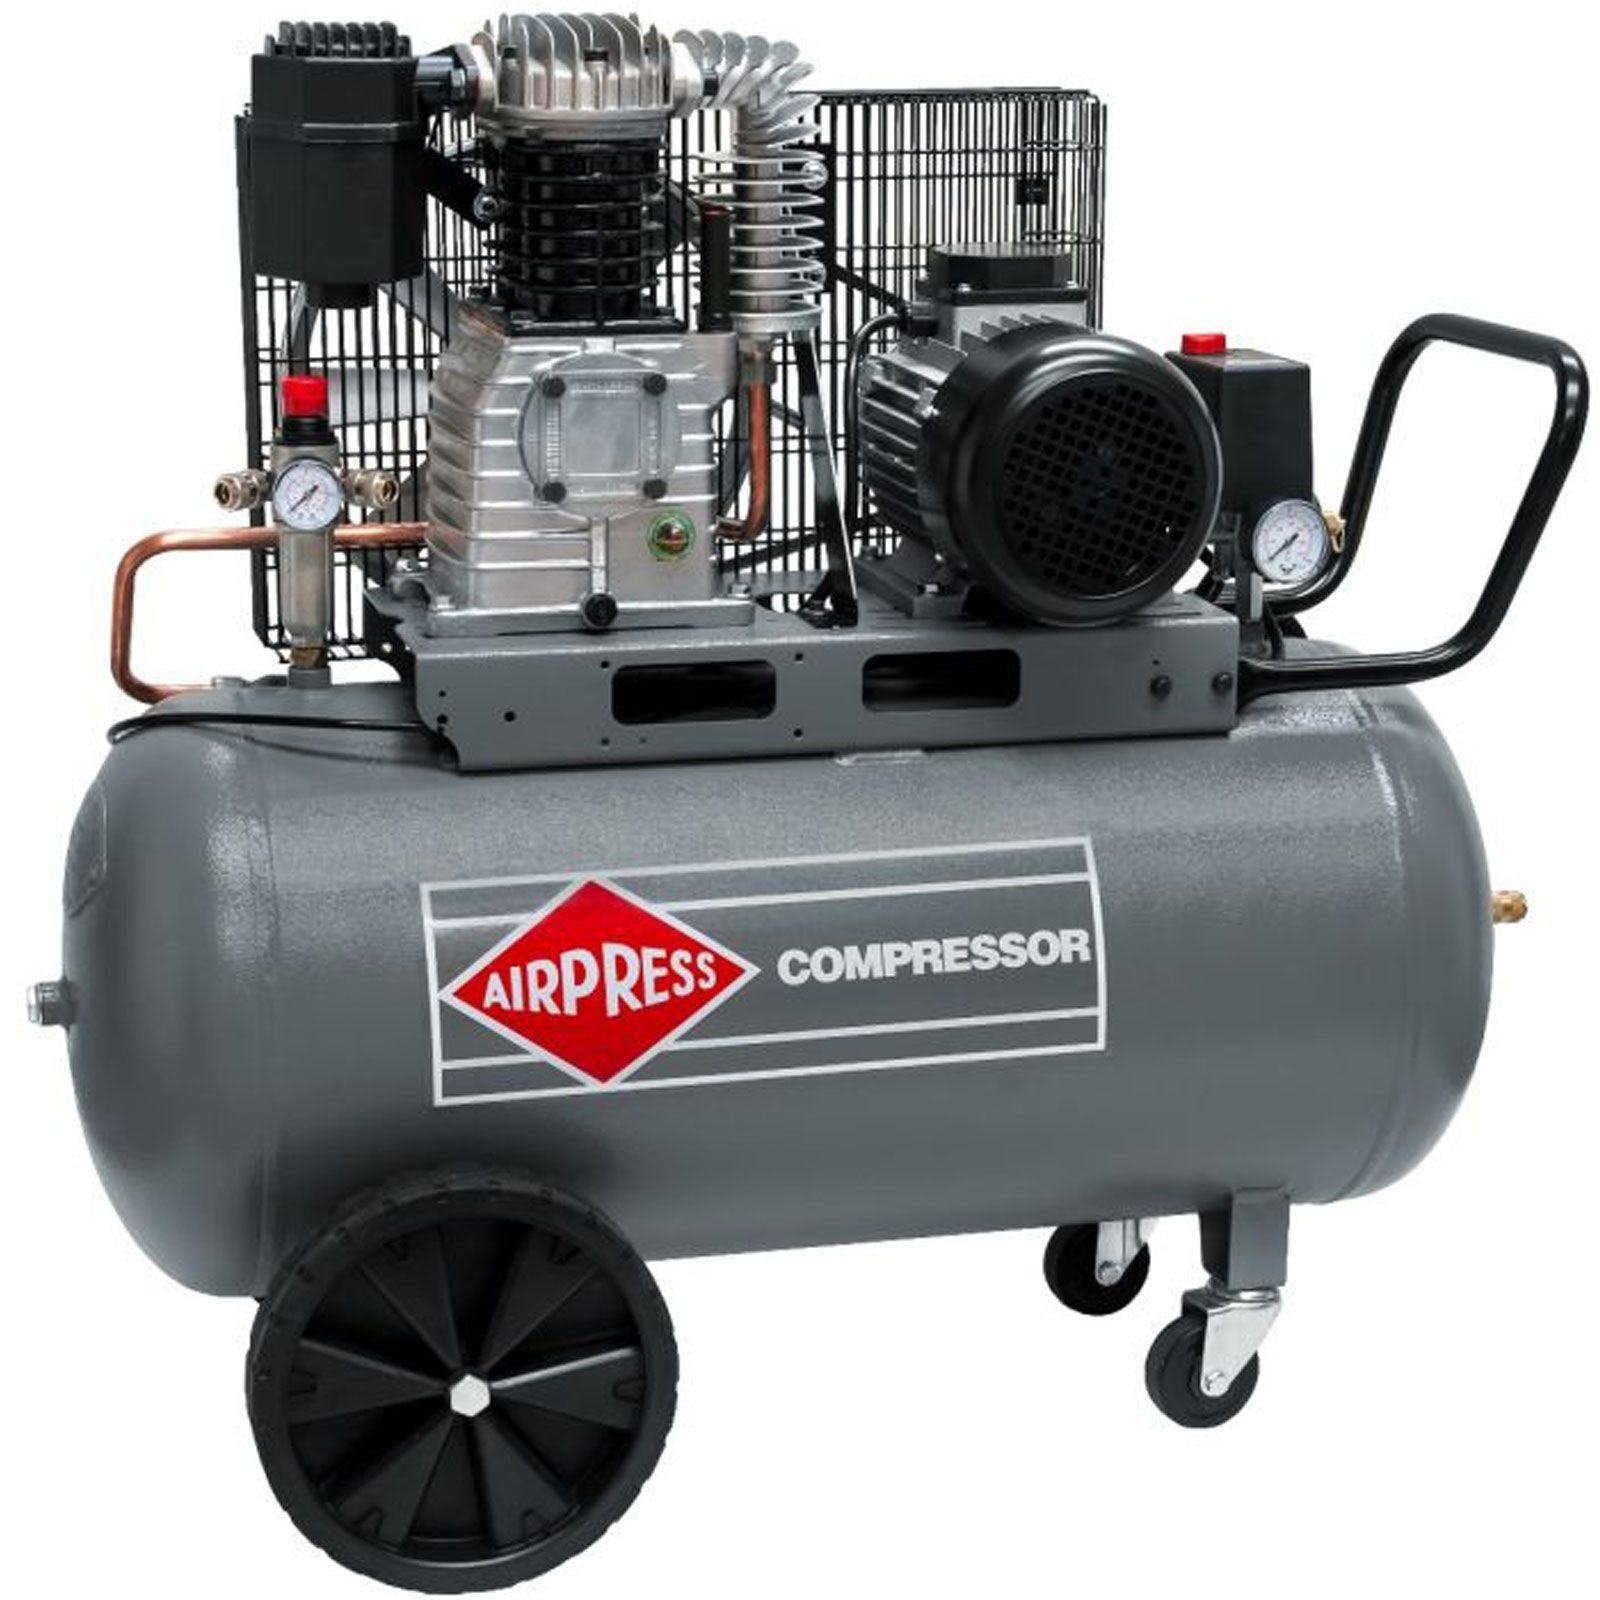 Airpress Kompressor Druckluft- Kompressor 3,0 PS 100 Liter 10 bar HK  425-100 Typ 360501, max. 10 bar, 100 l, 1 Stück | Druckluftgeräte